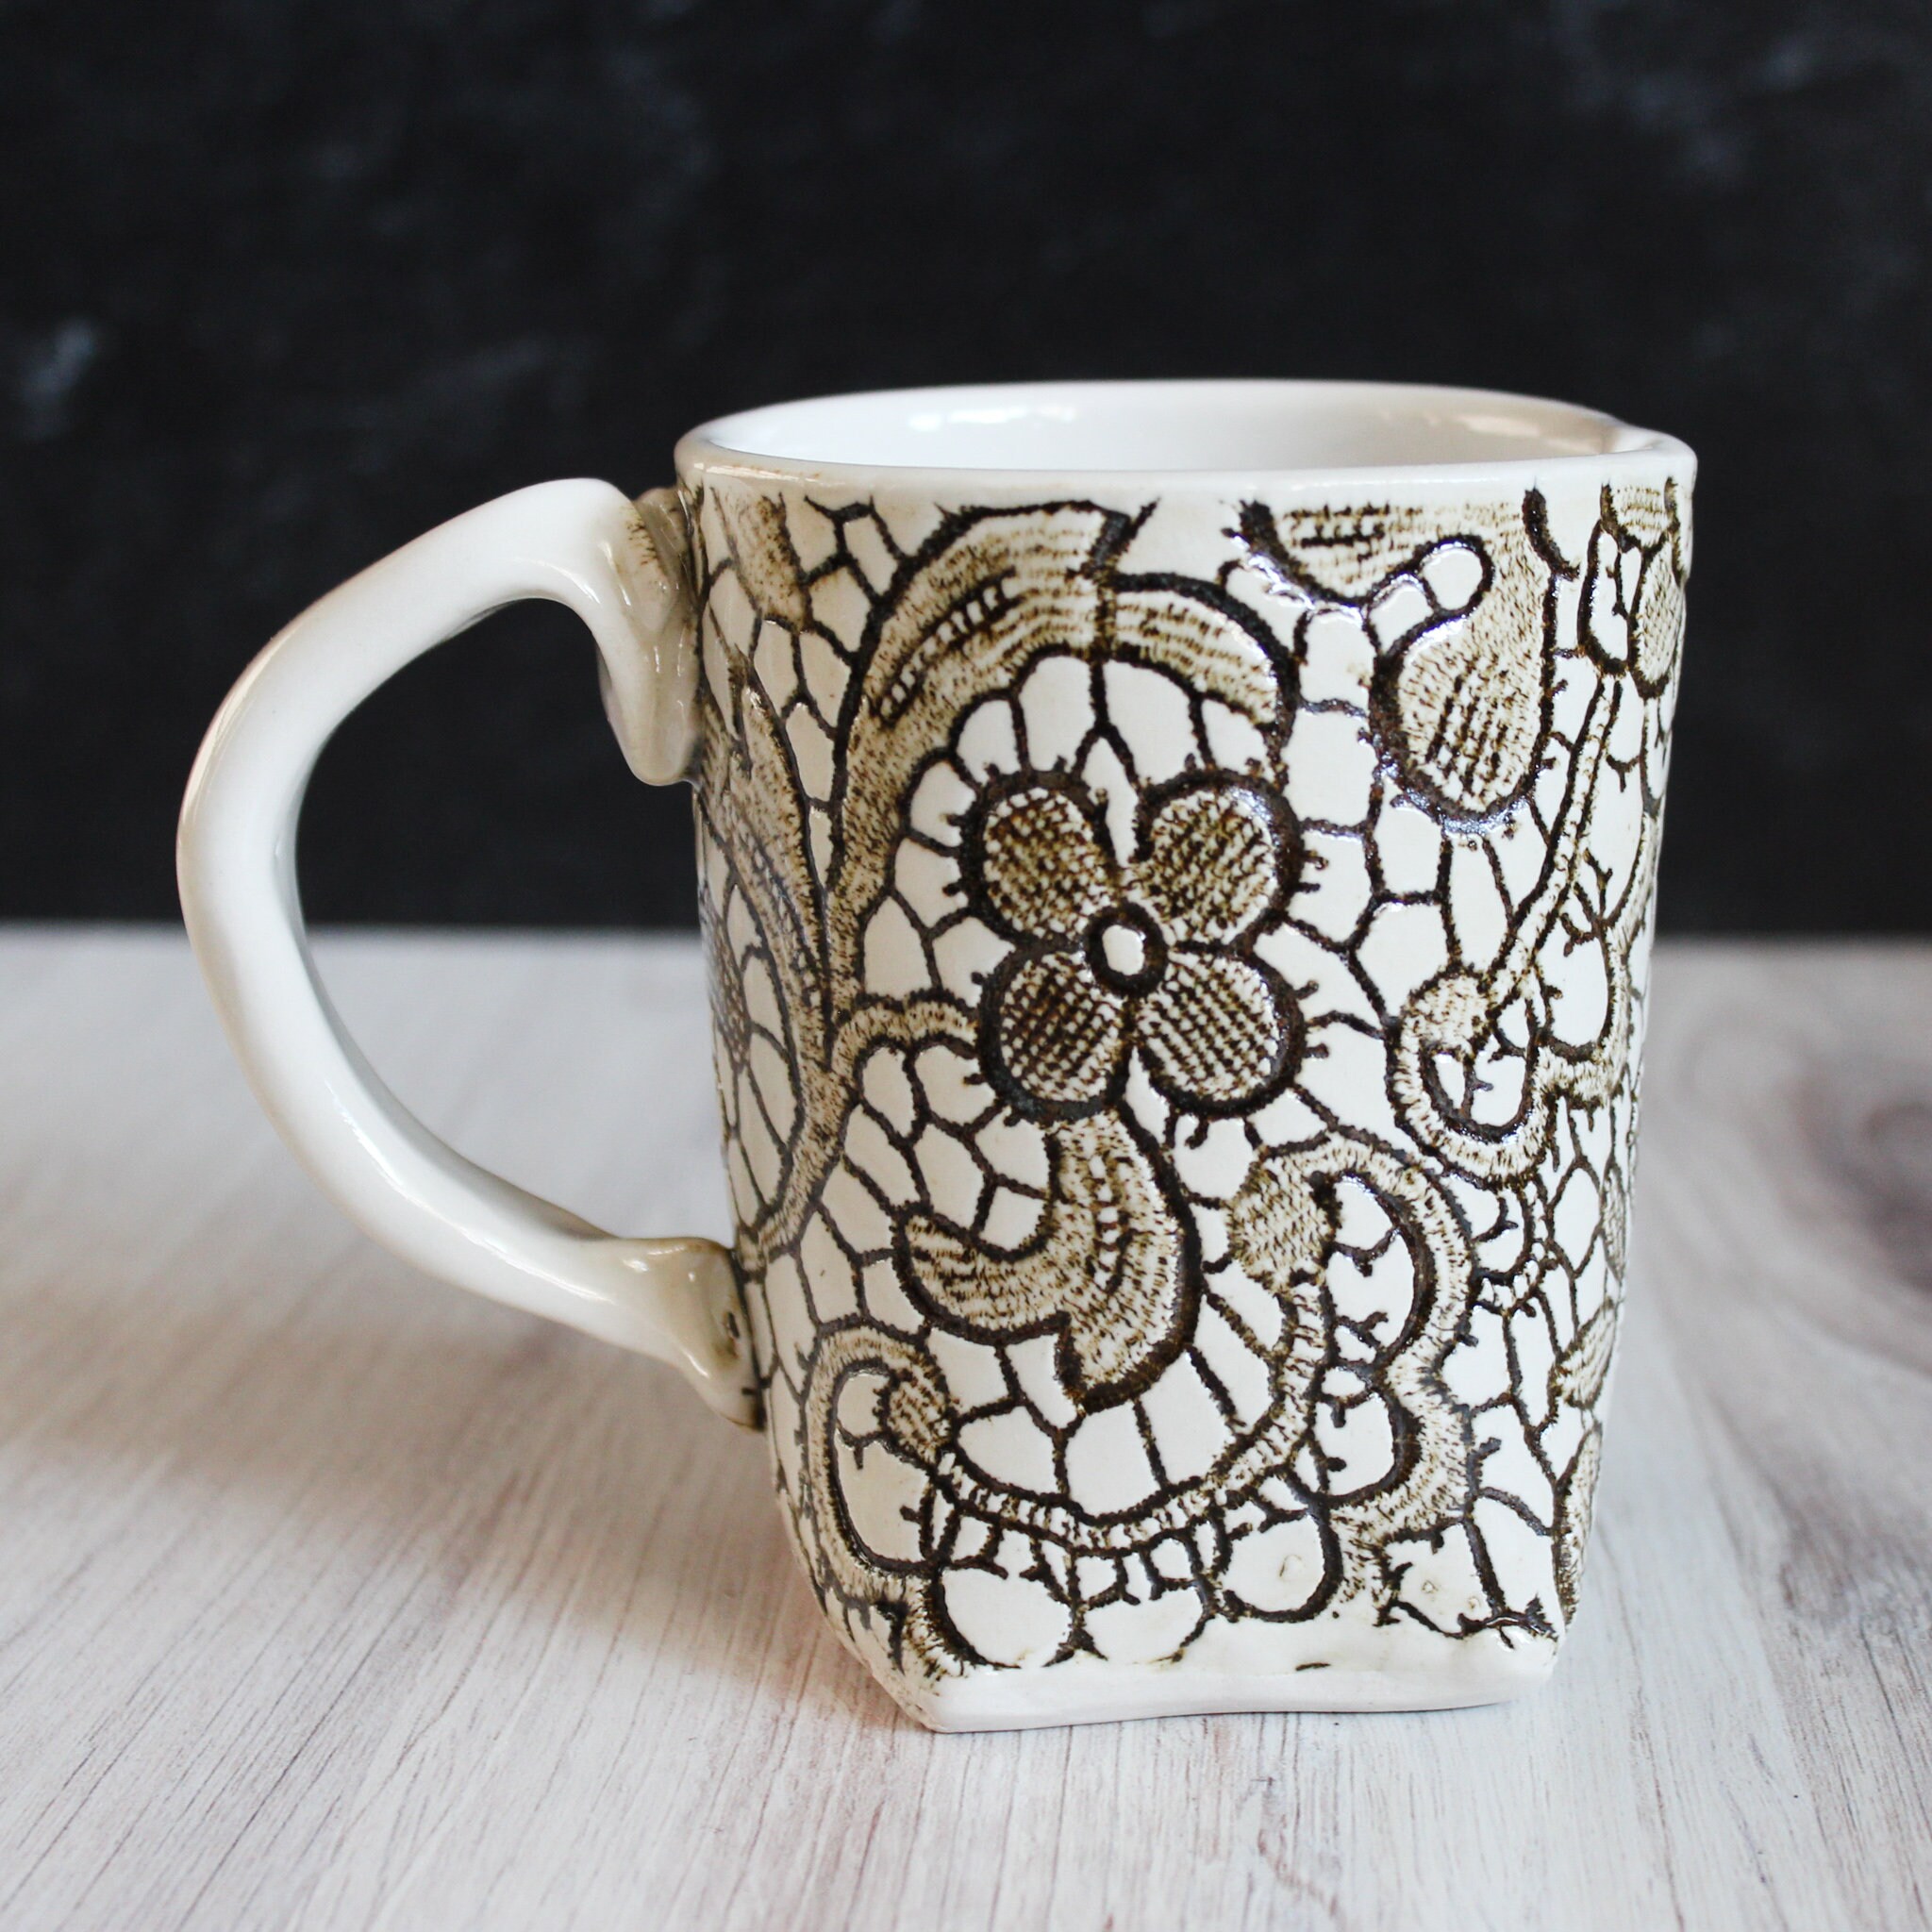 Colleen Deiss Designs — White Floral Mug